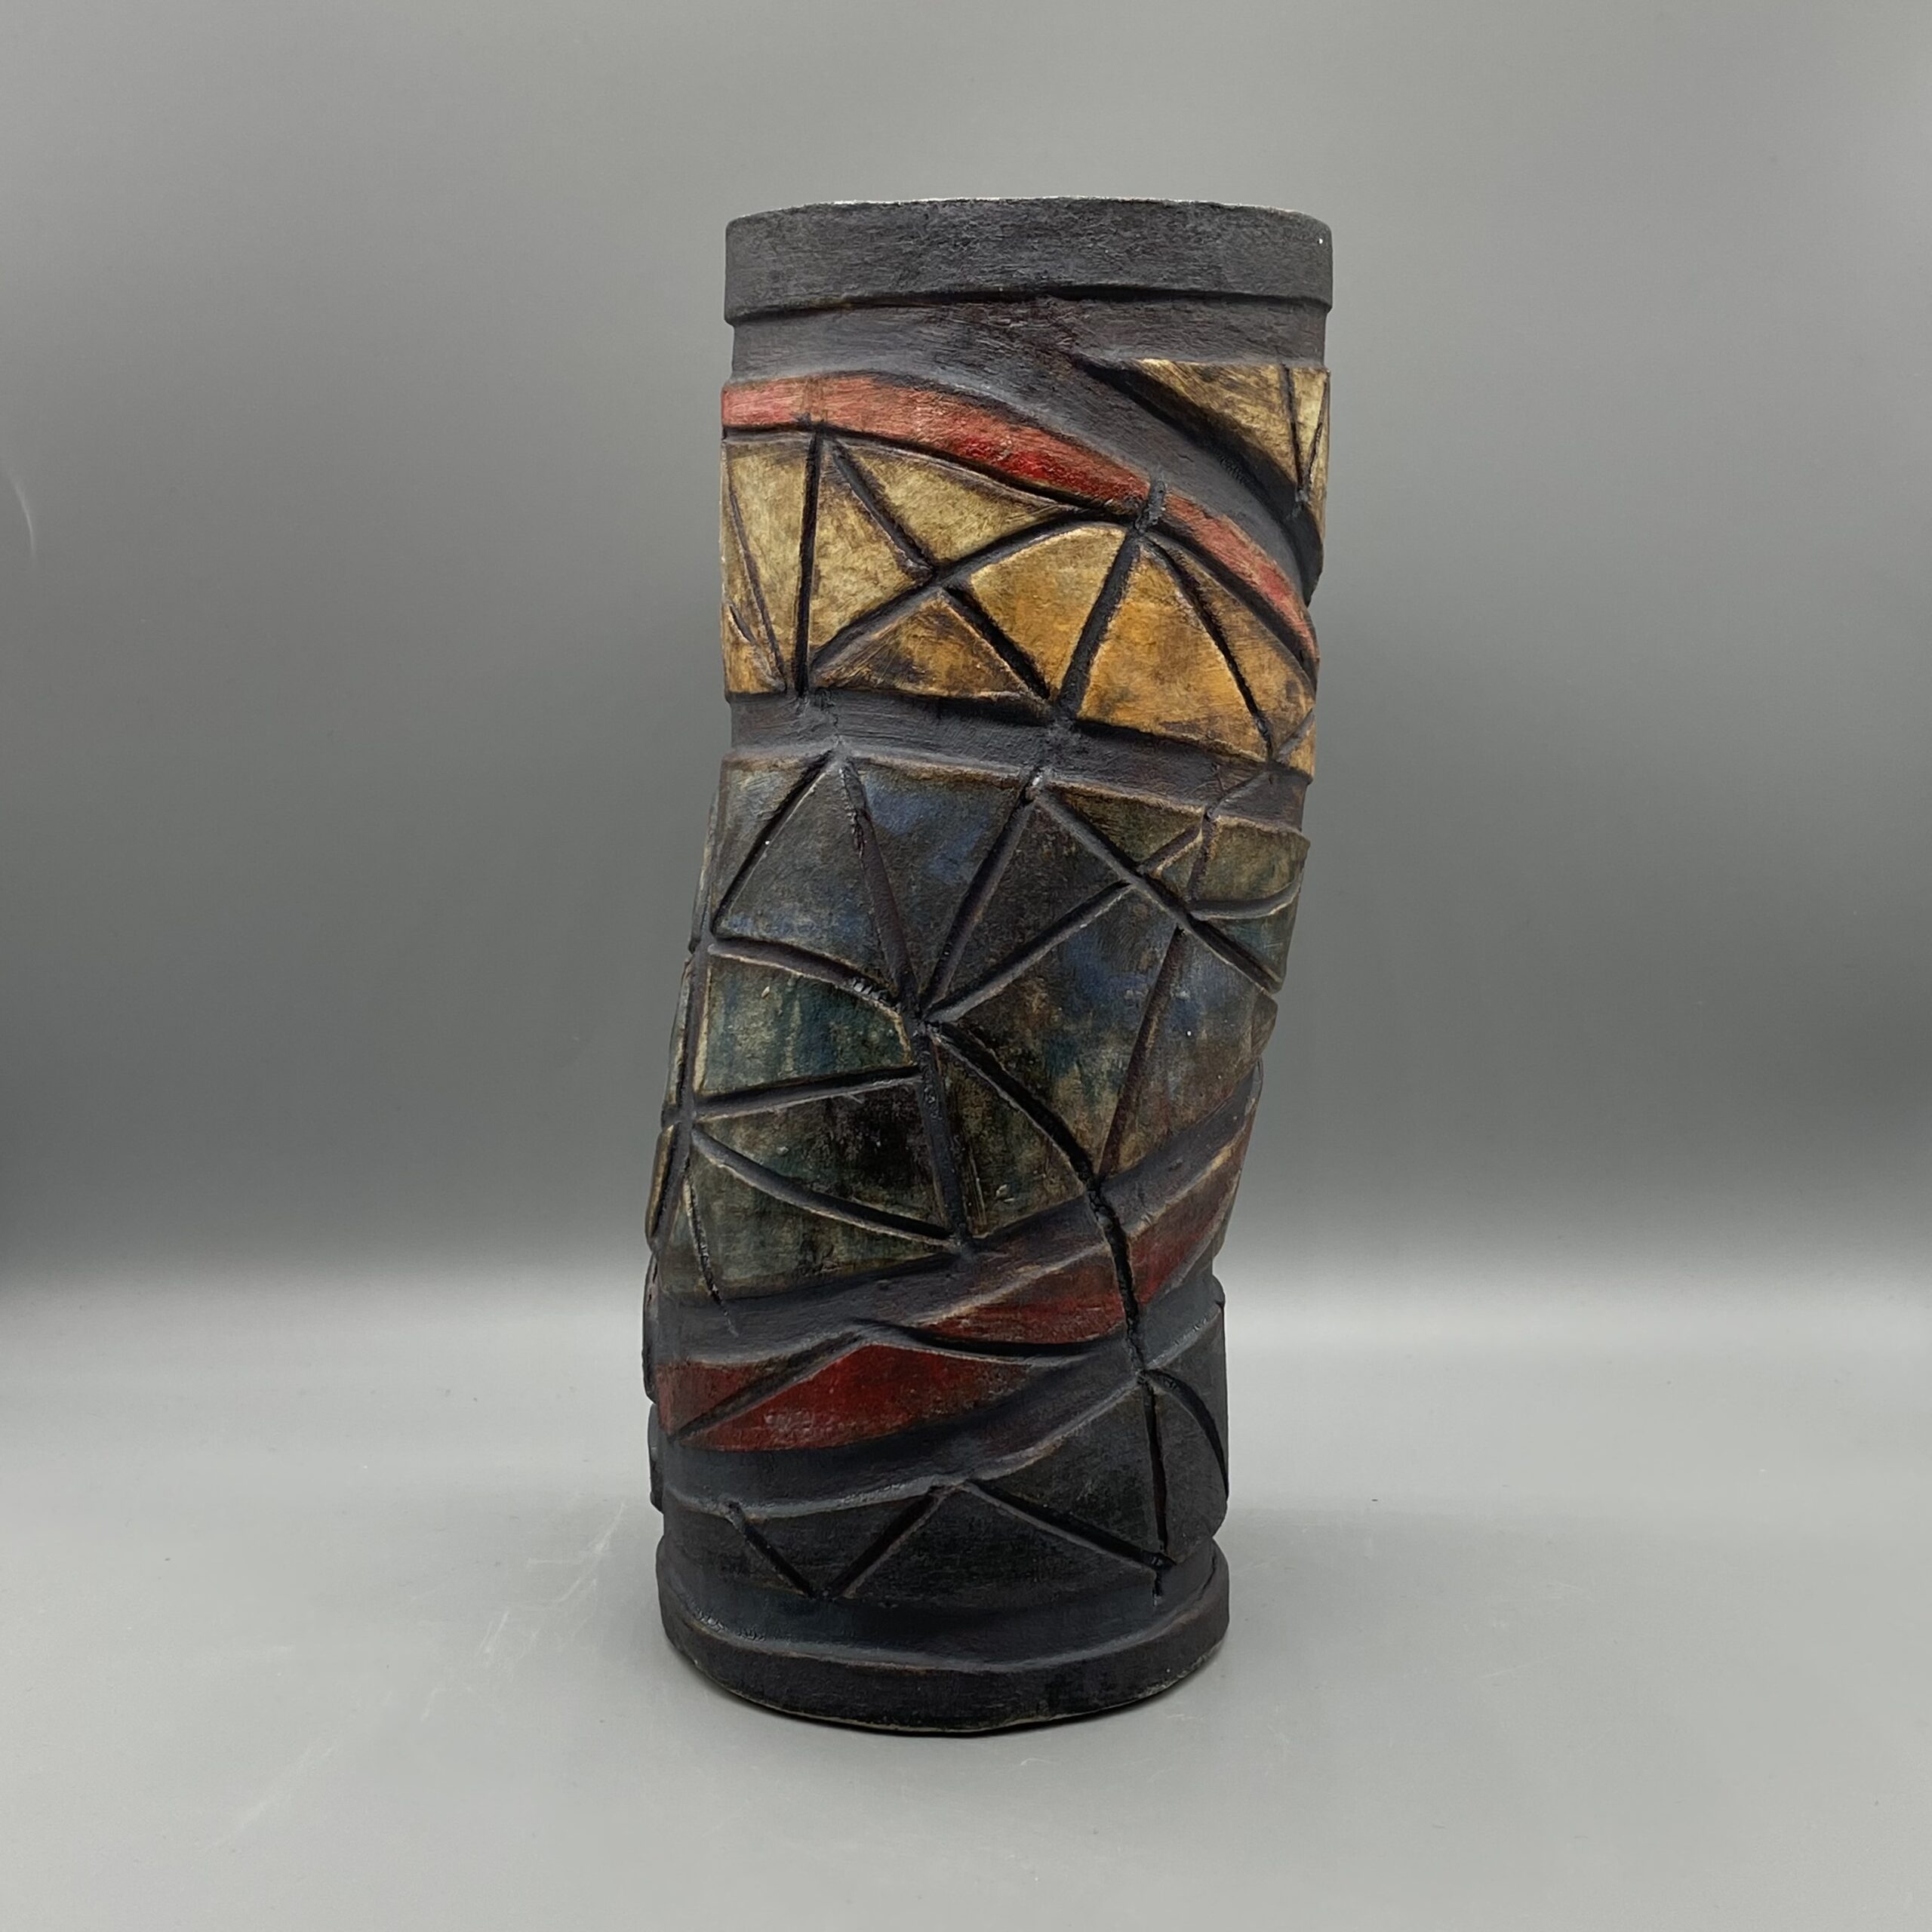 Featured image for “Cylinder vase”